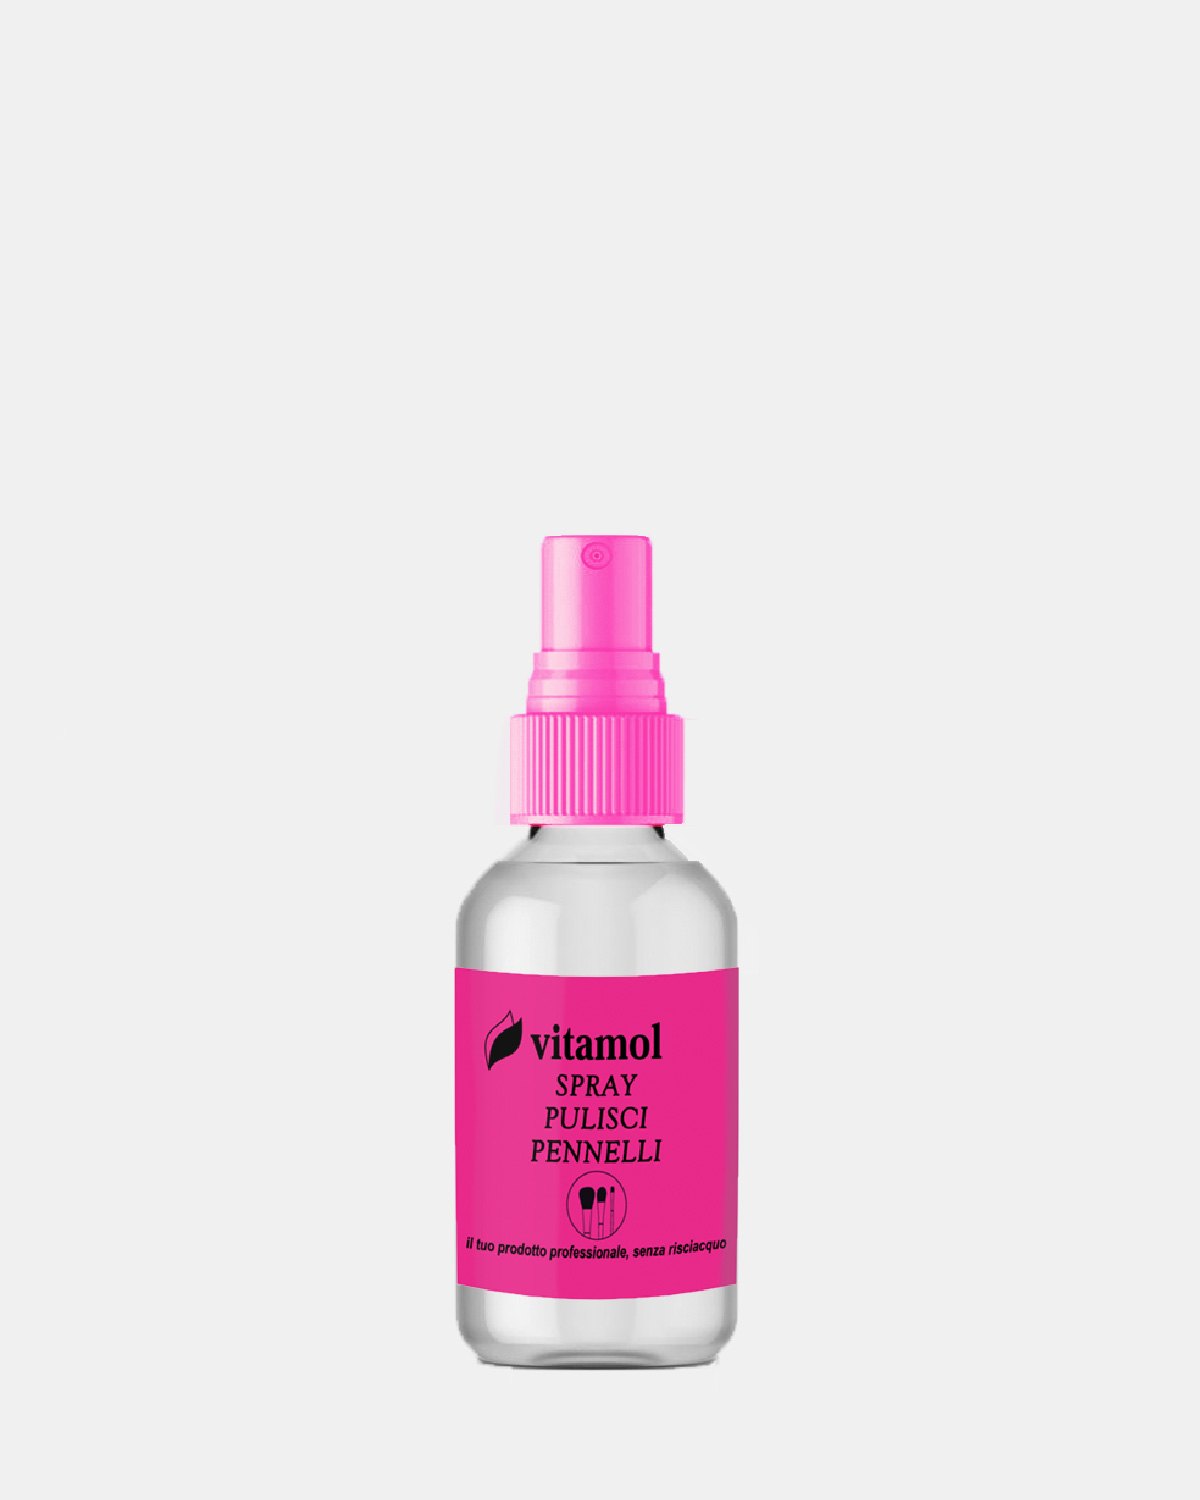 Spray pulisci pennelli - igienizzante antibatterico, Shop online